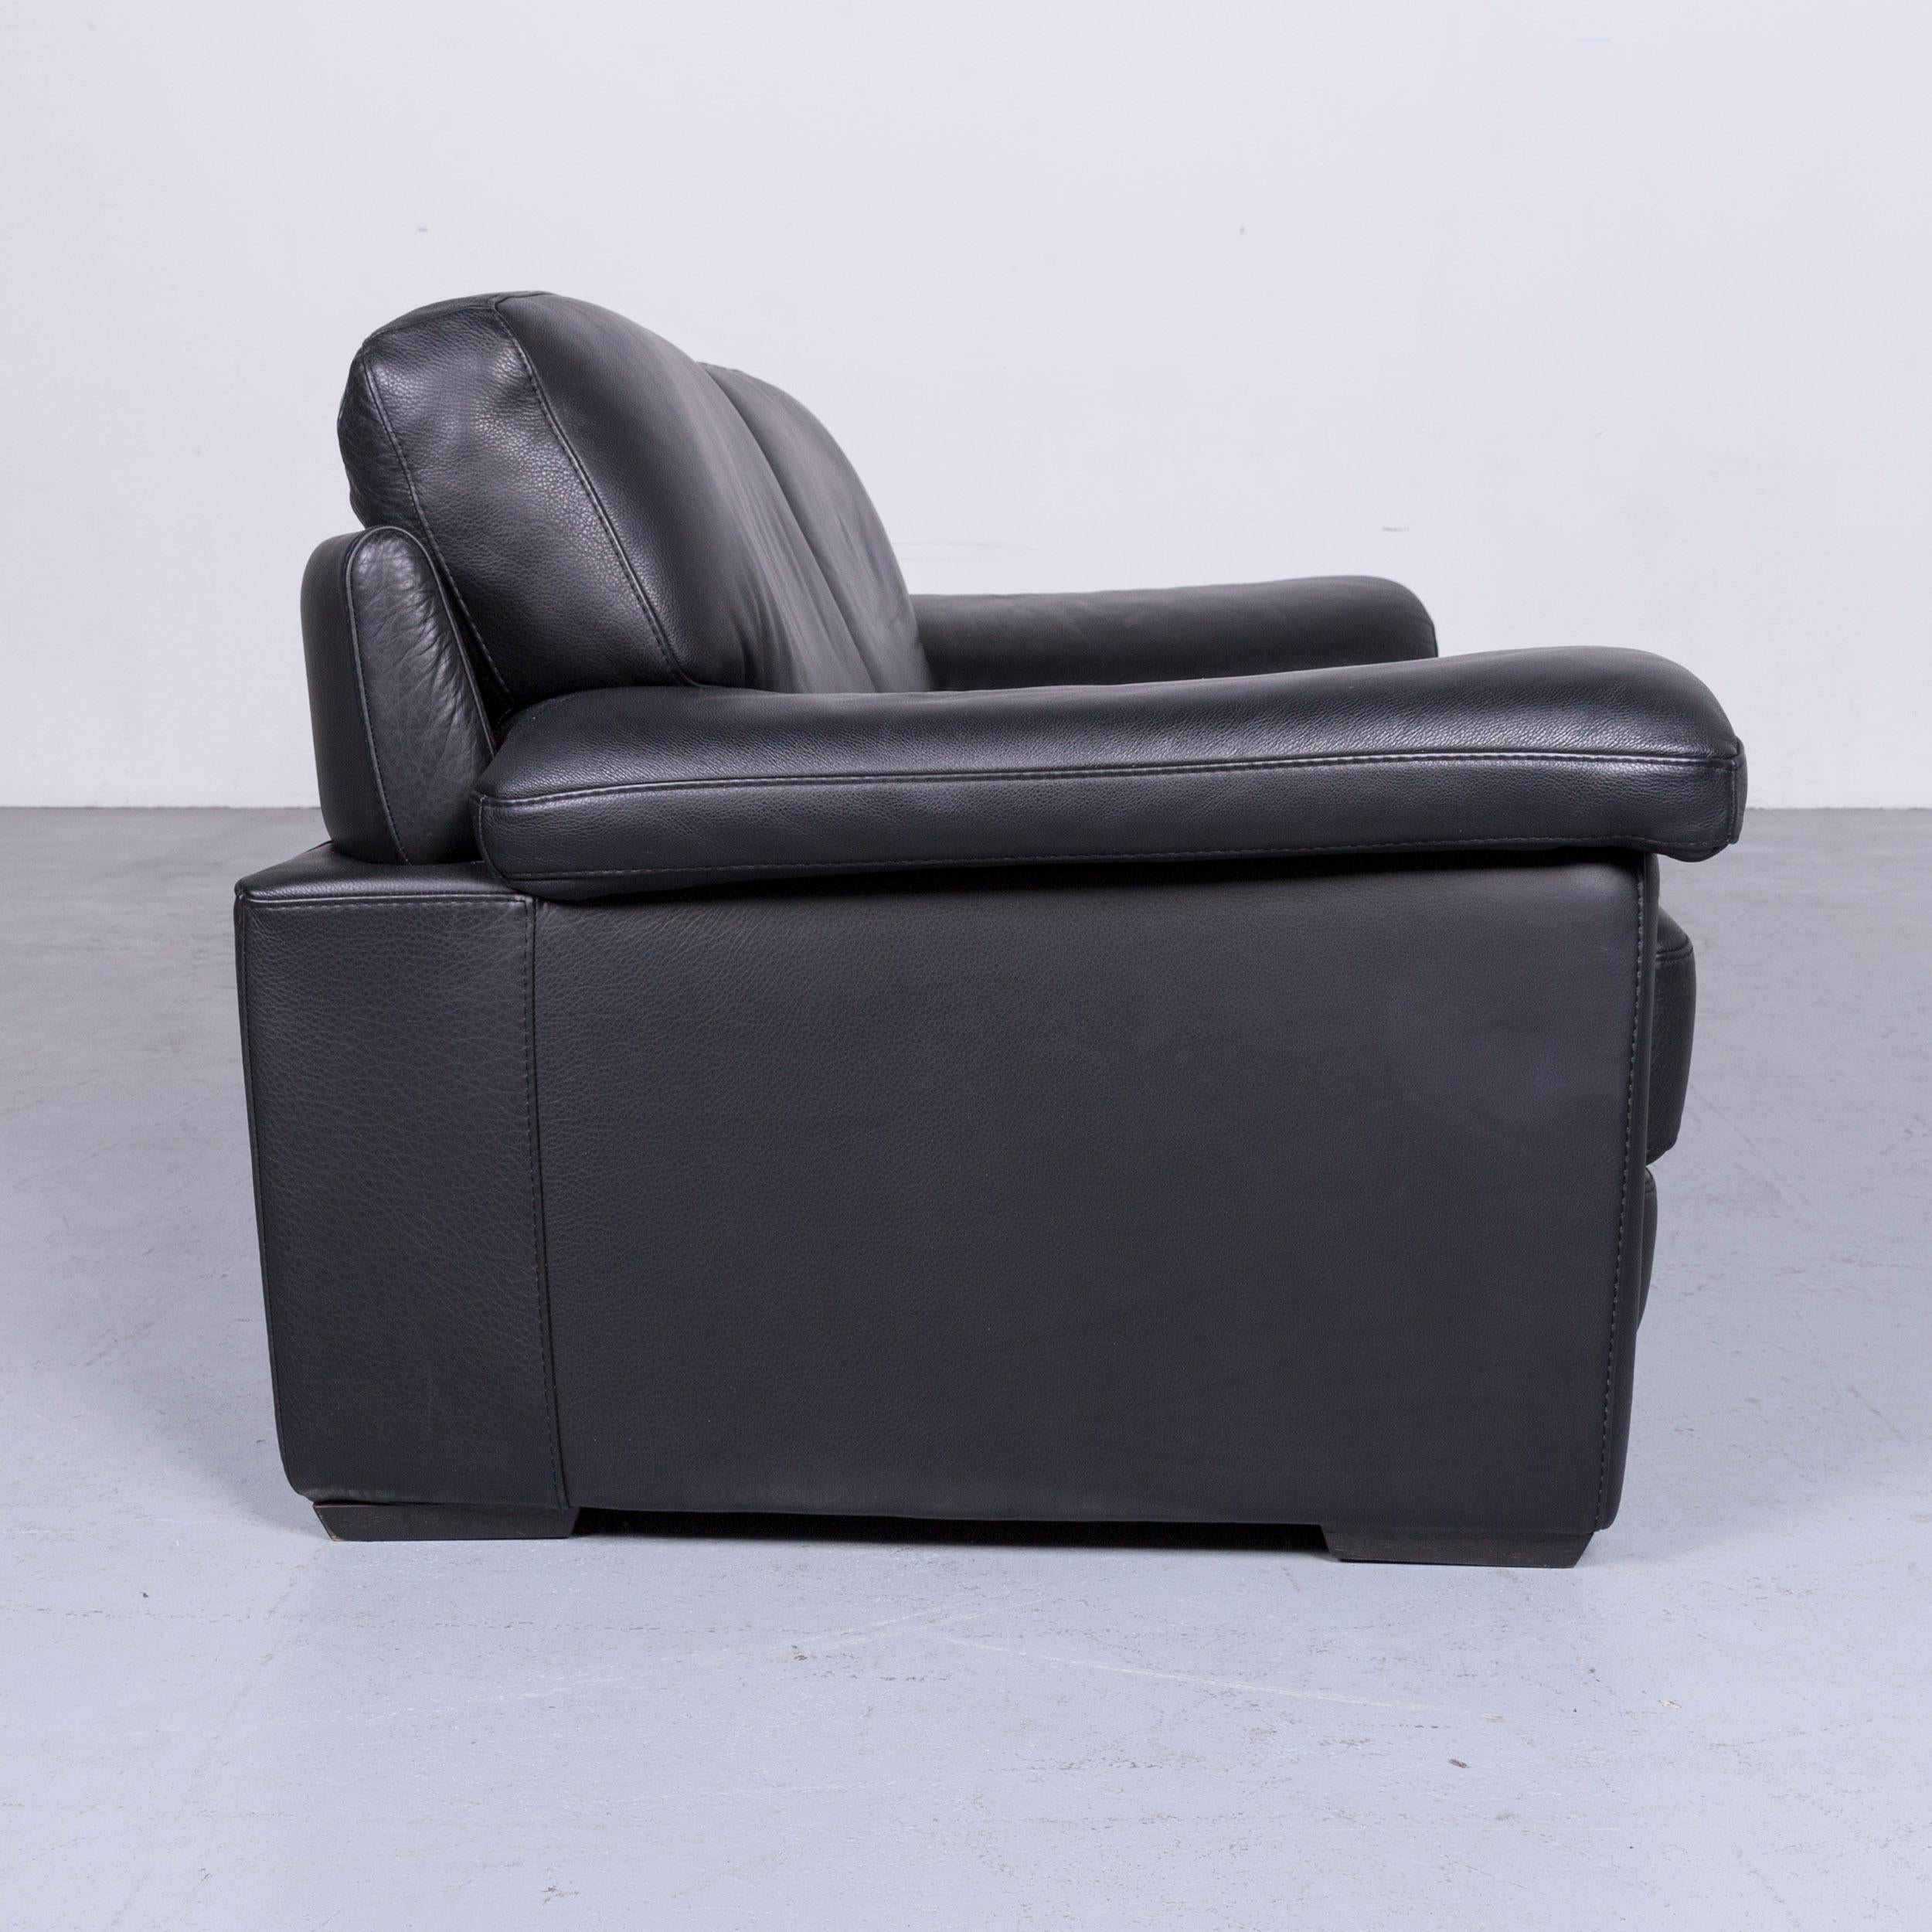 Natuzzi Designer Leather Three-Seat Sofa Couch in Black 3